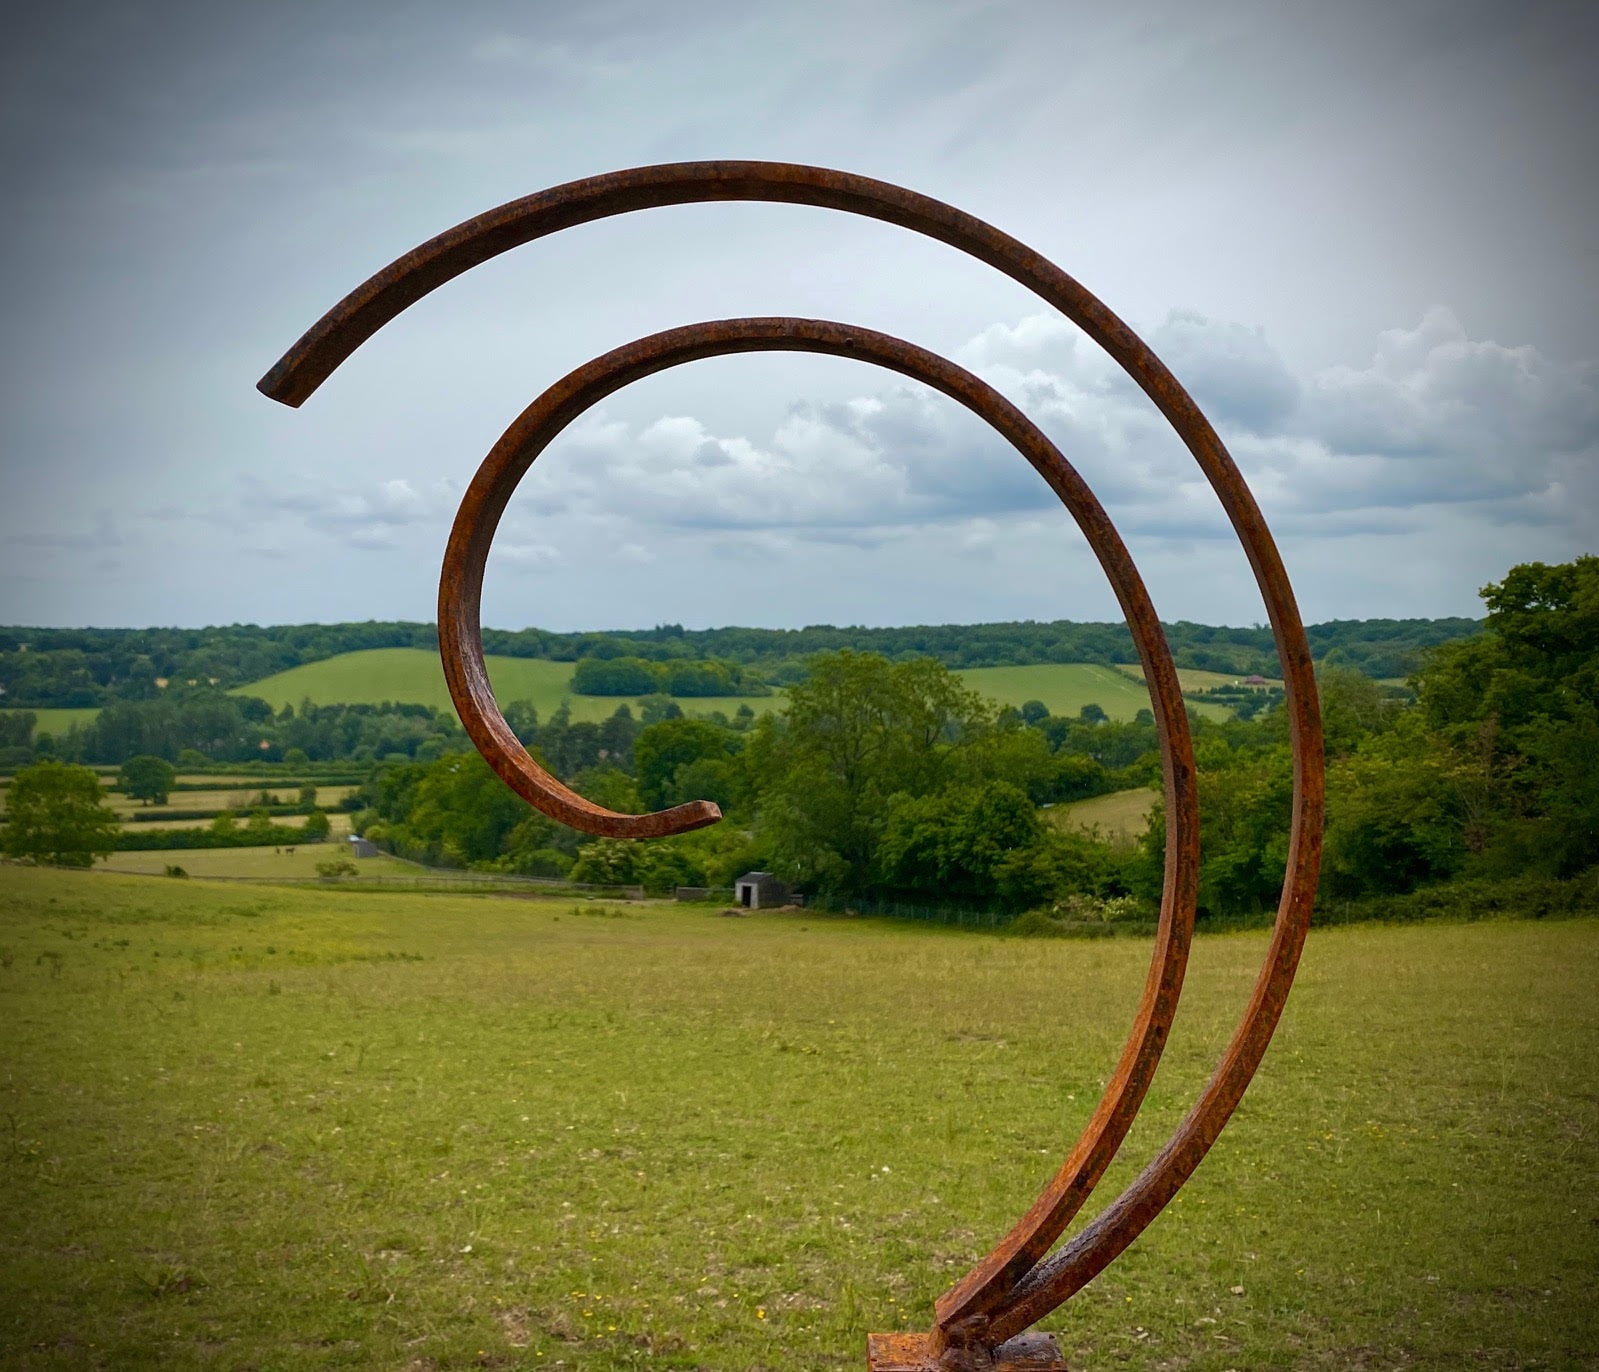 Large Metal Ring Sculpture + Reviews